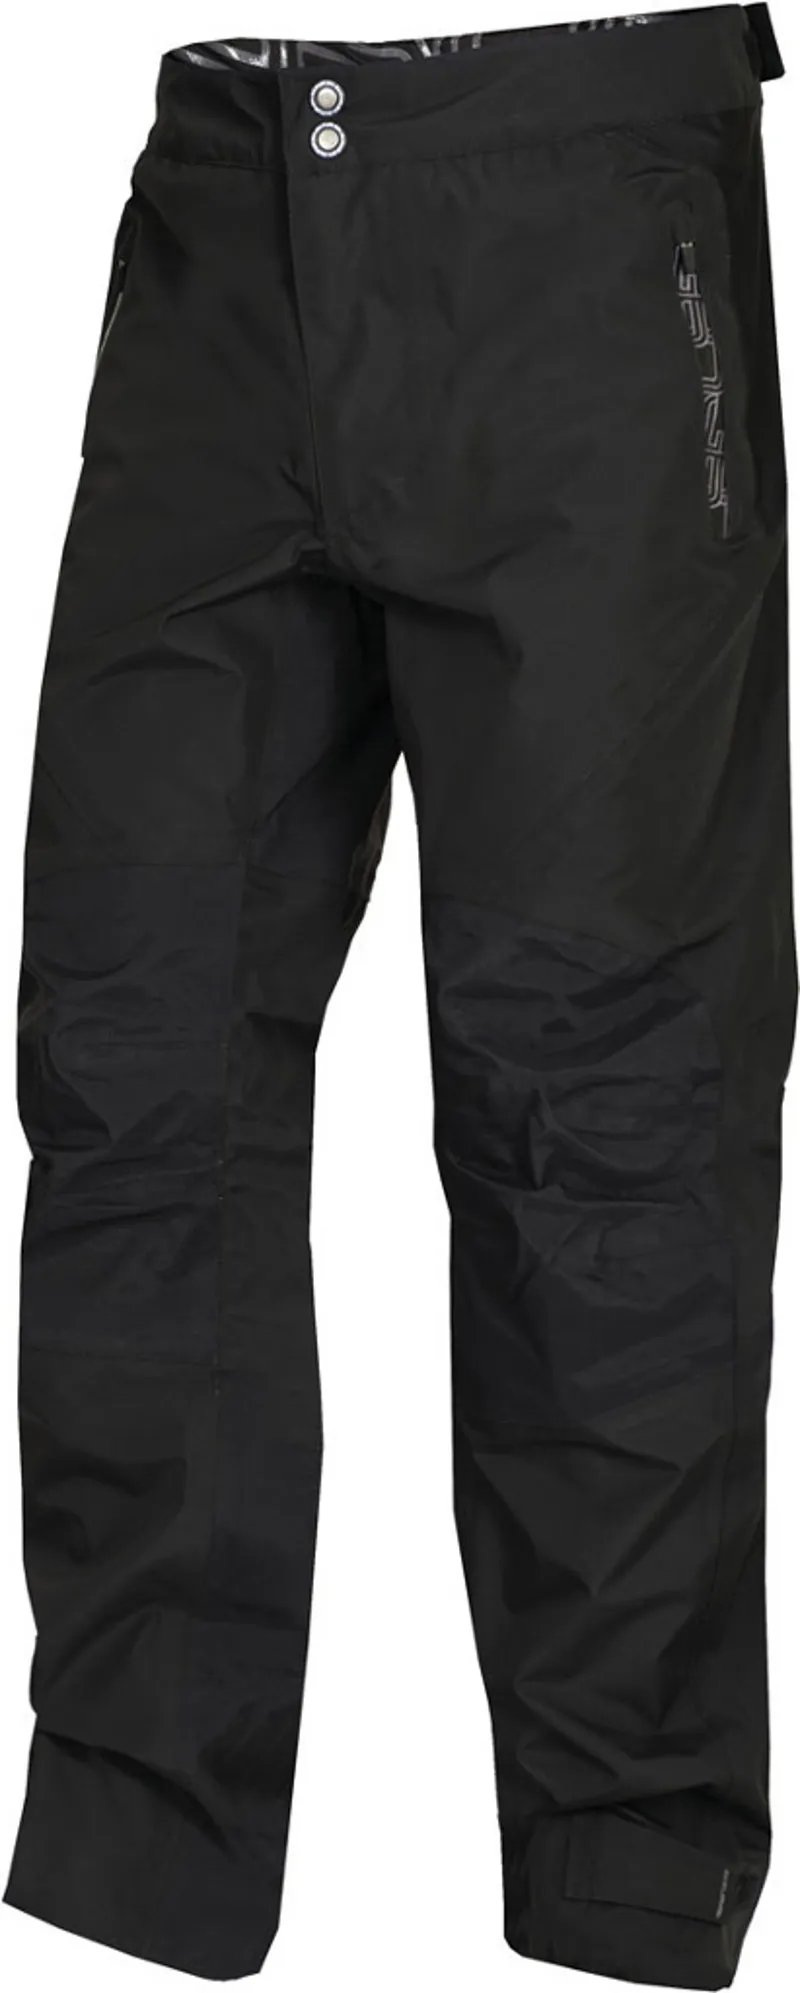 Altura Attack Waterproof Trousers Black 